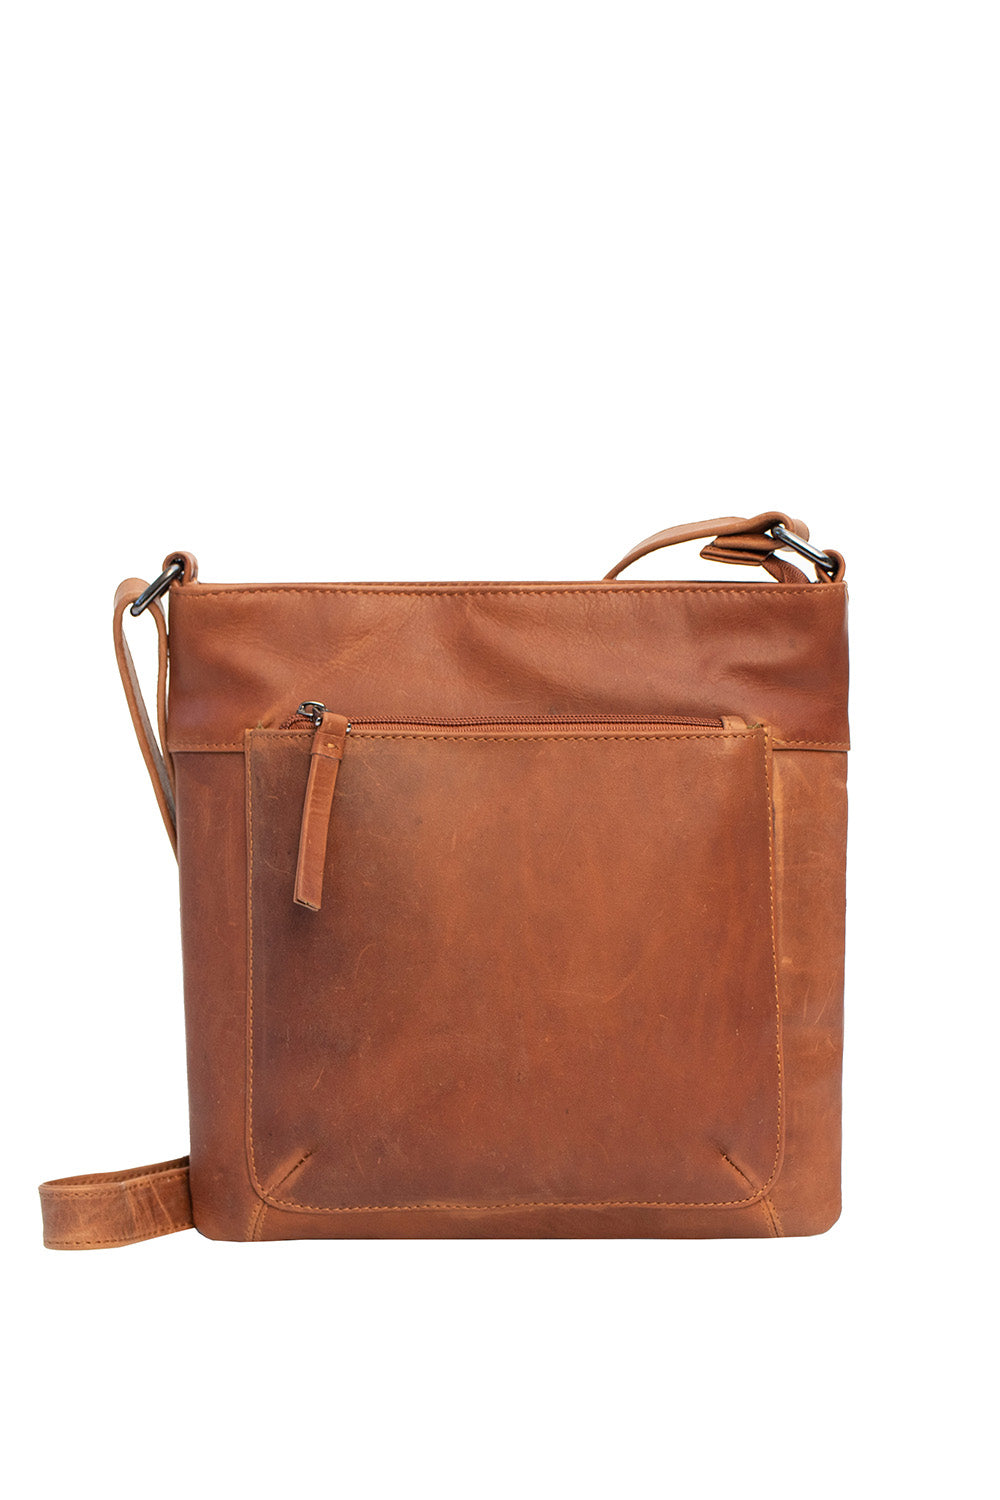 Texan Ladies Leather Handbag - 843